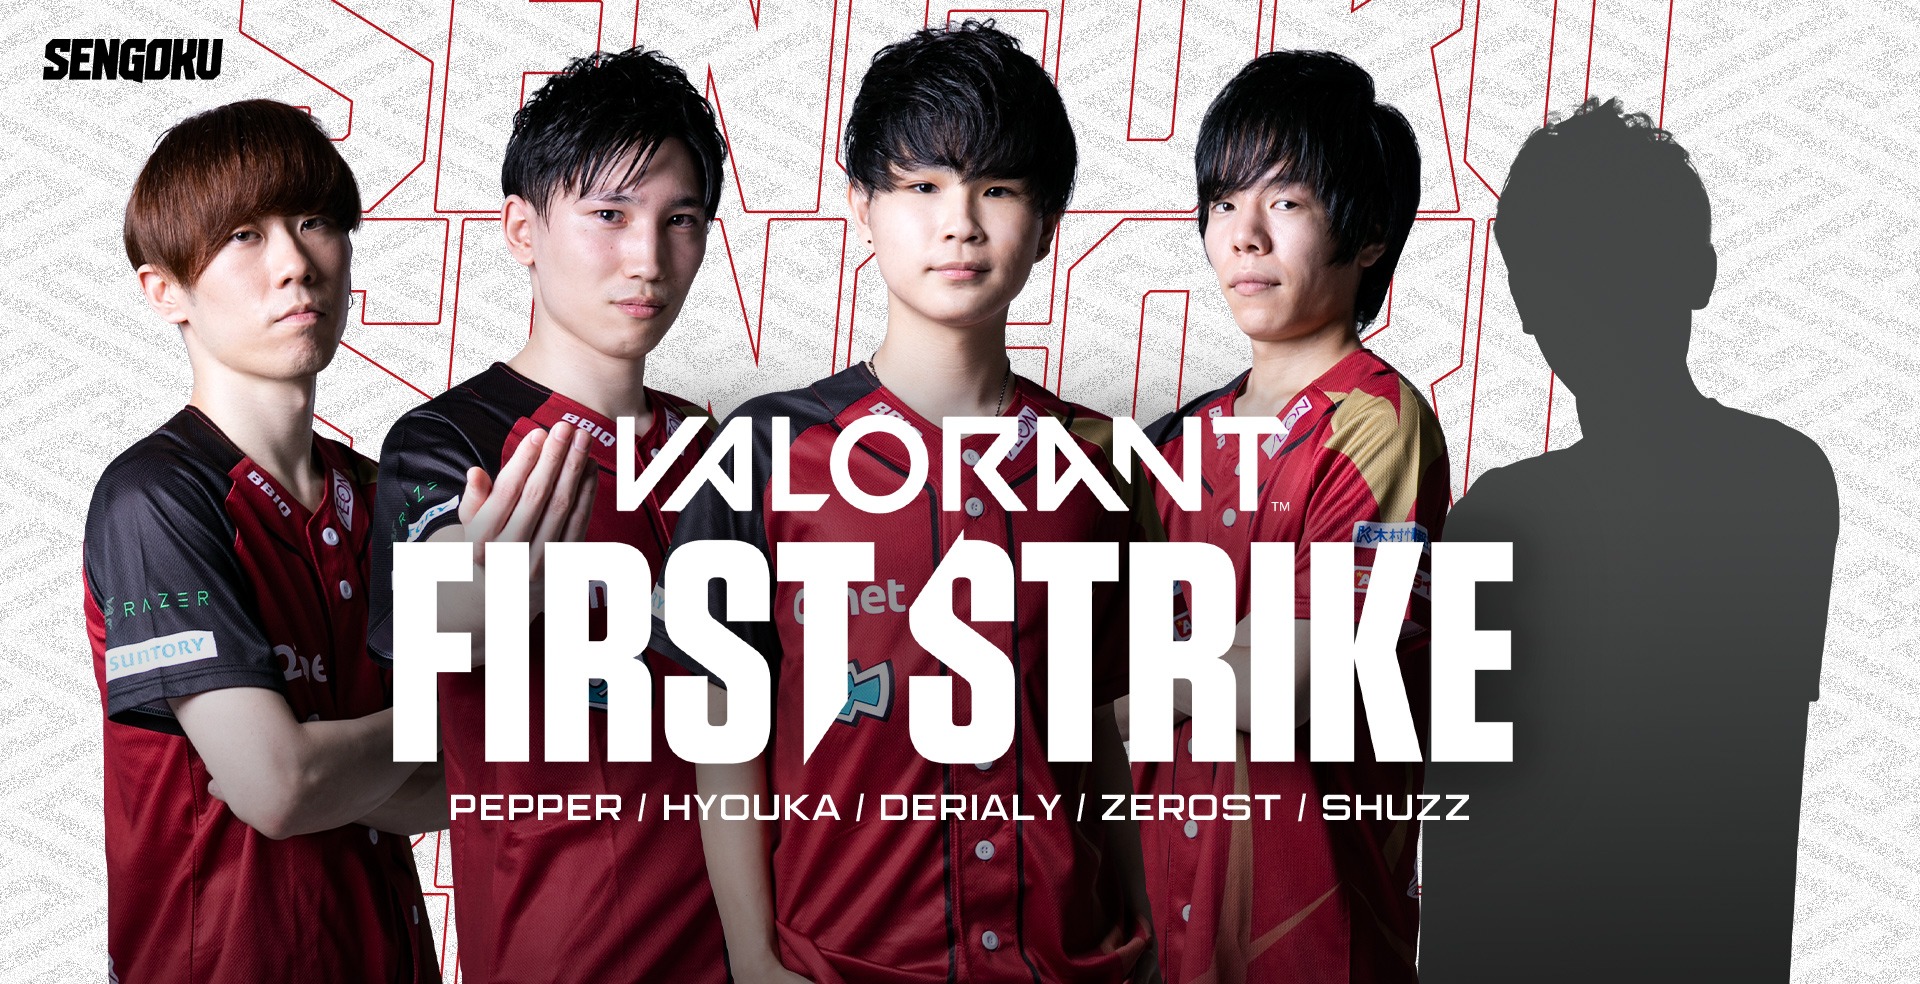 【VALORANT部門】VALORANT FIRST STRIKE JAPAN 出場のお知らせ